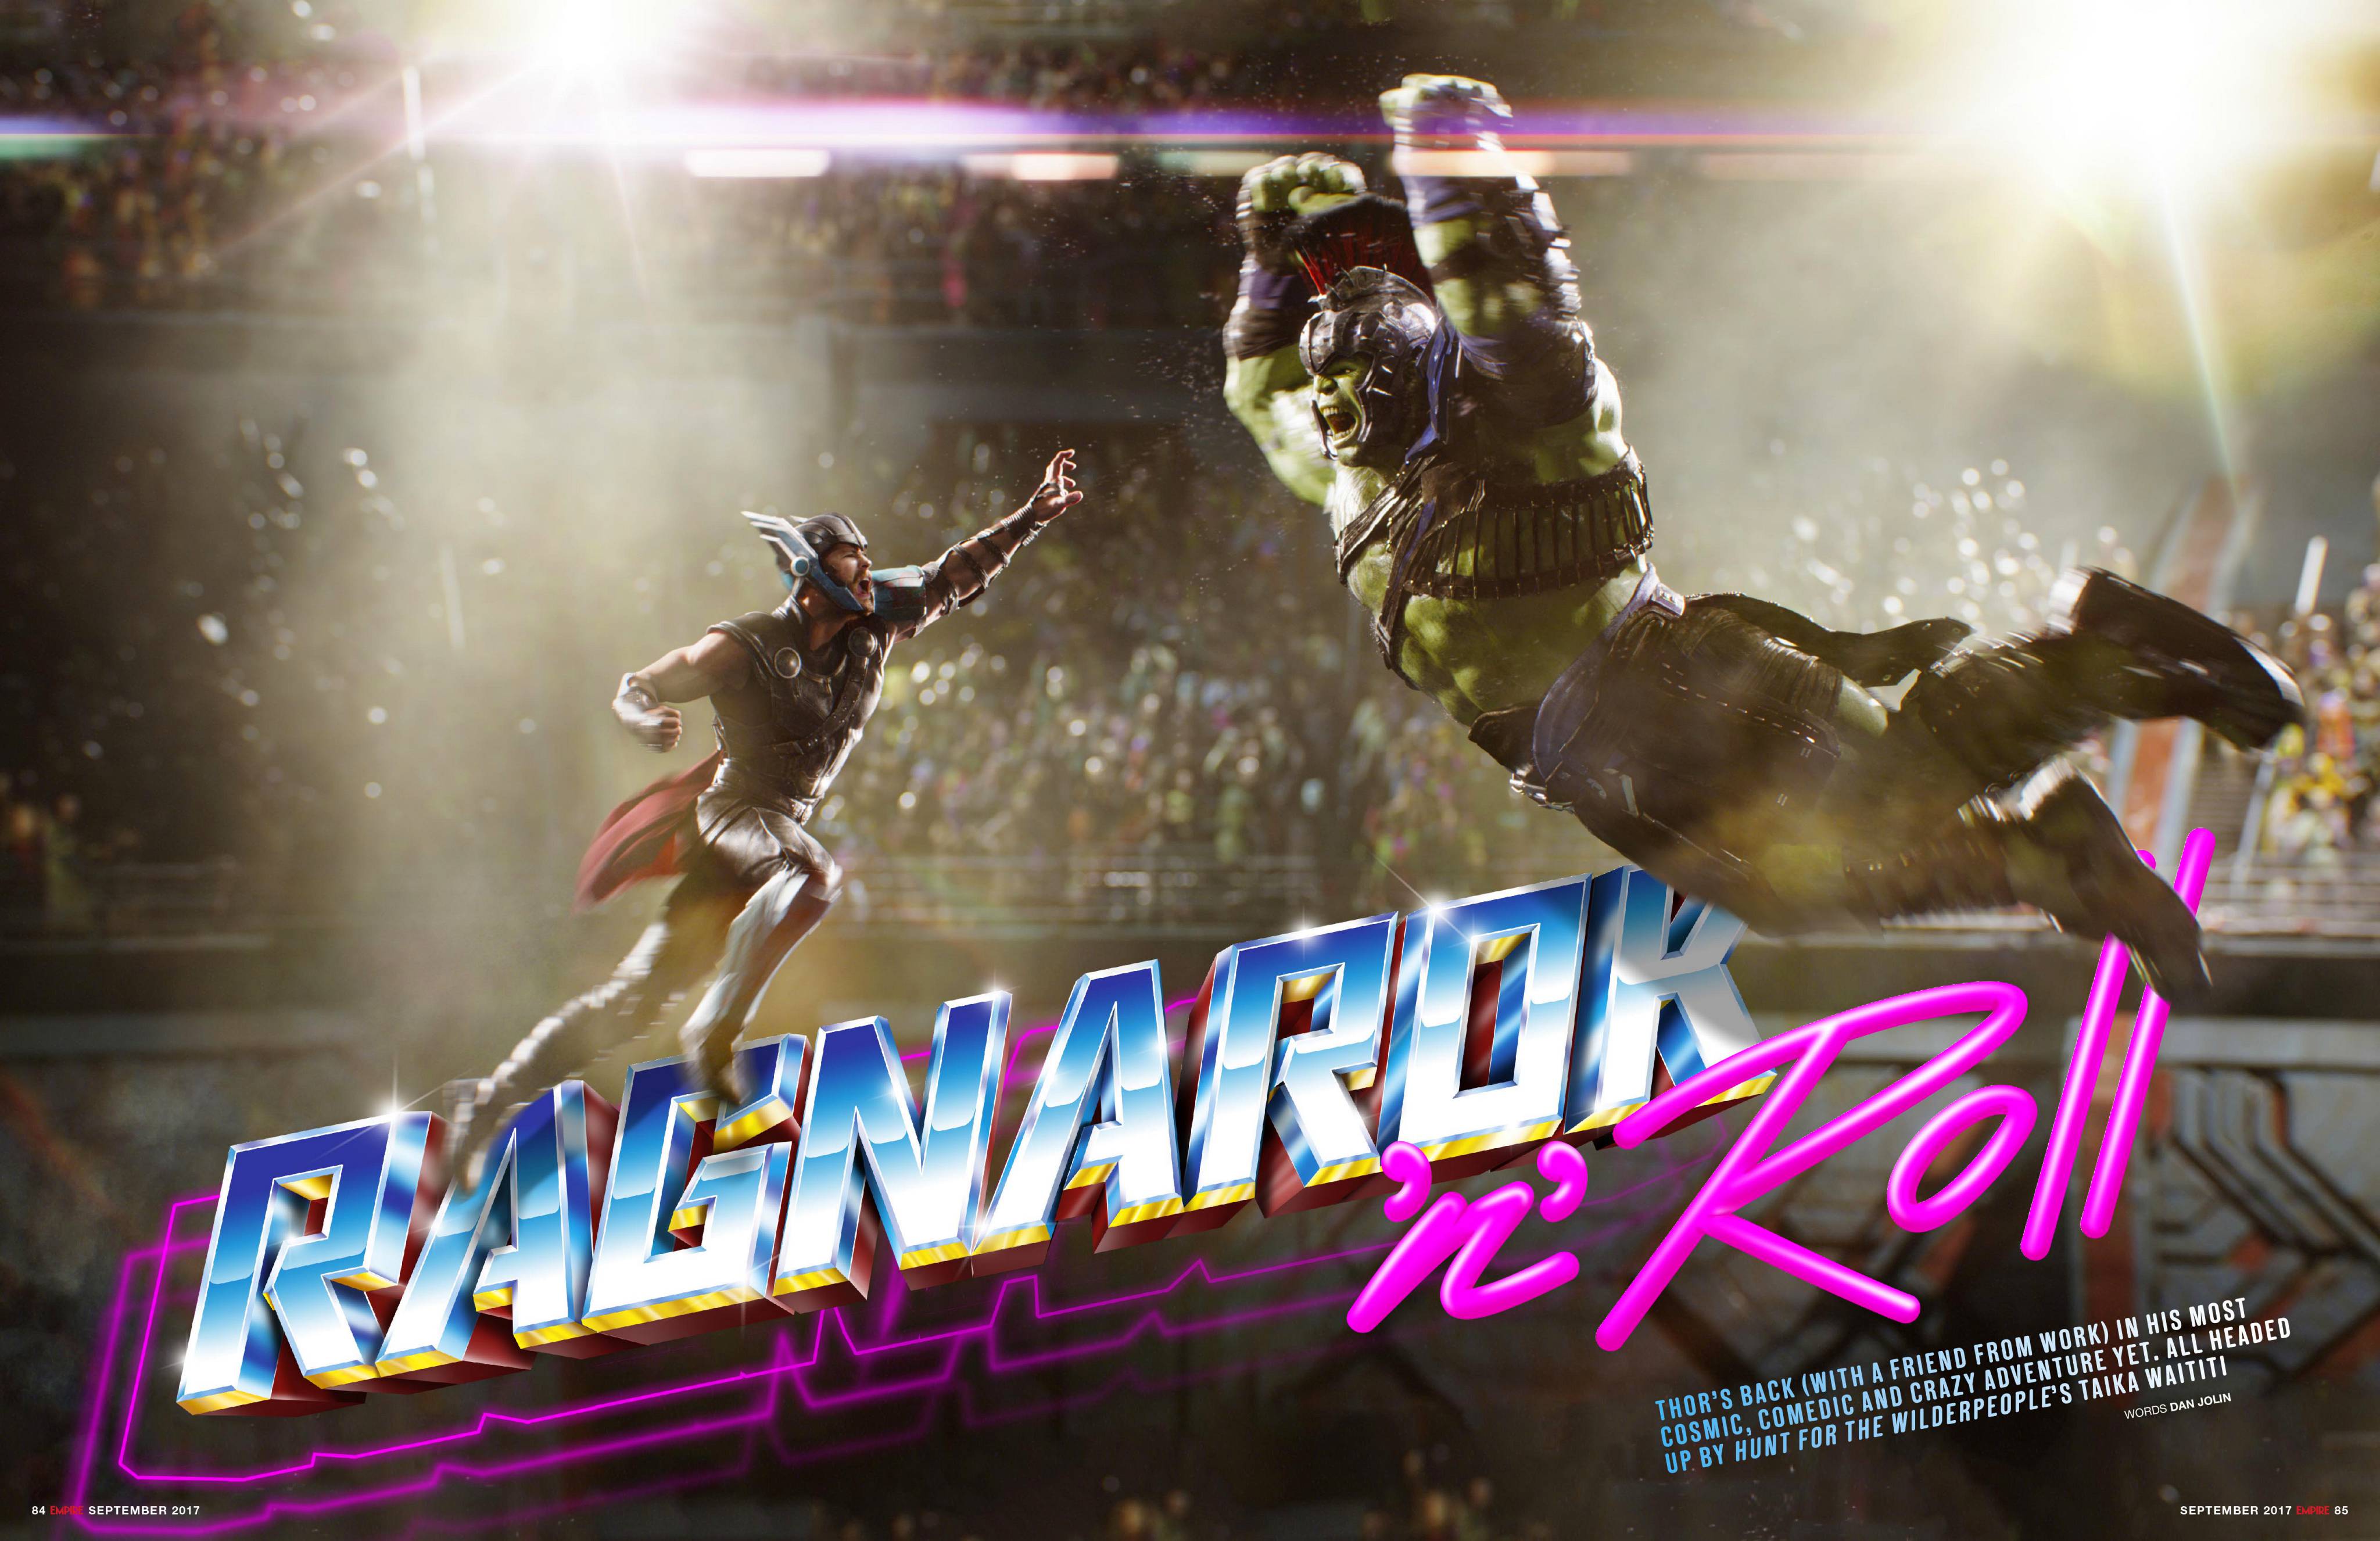 New Hulk vs Thor Image From Ragnarok. Cosmic Book News